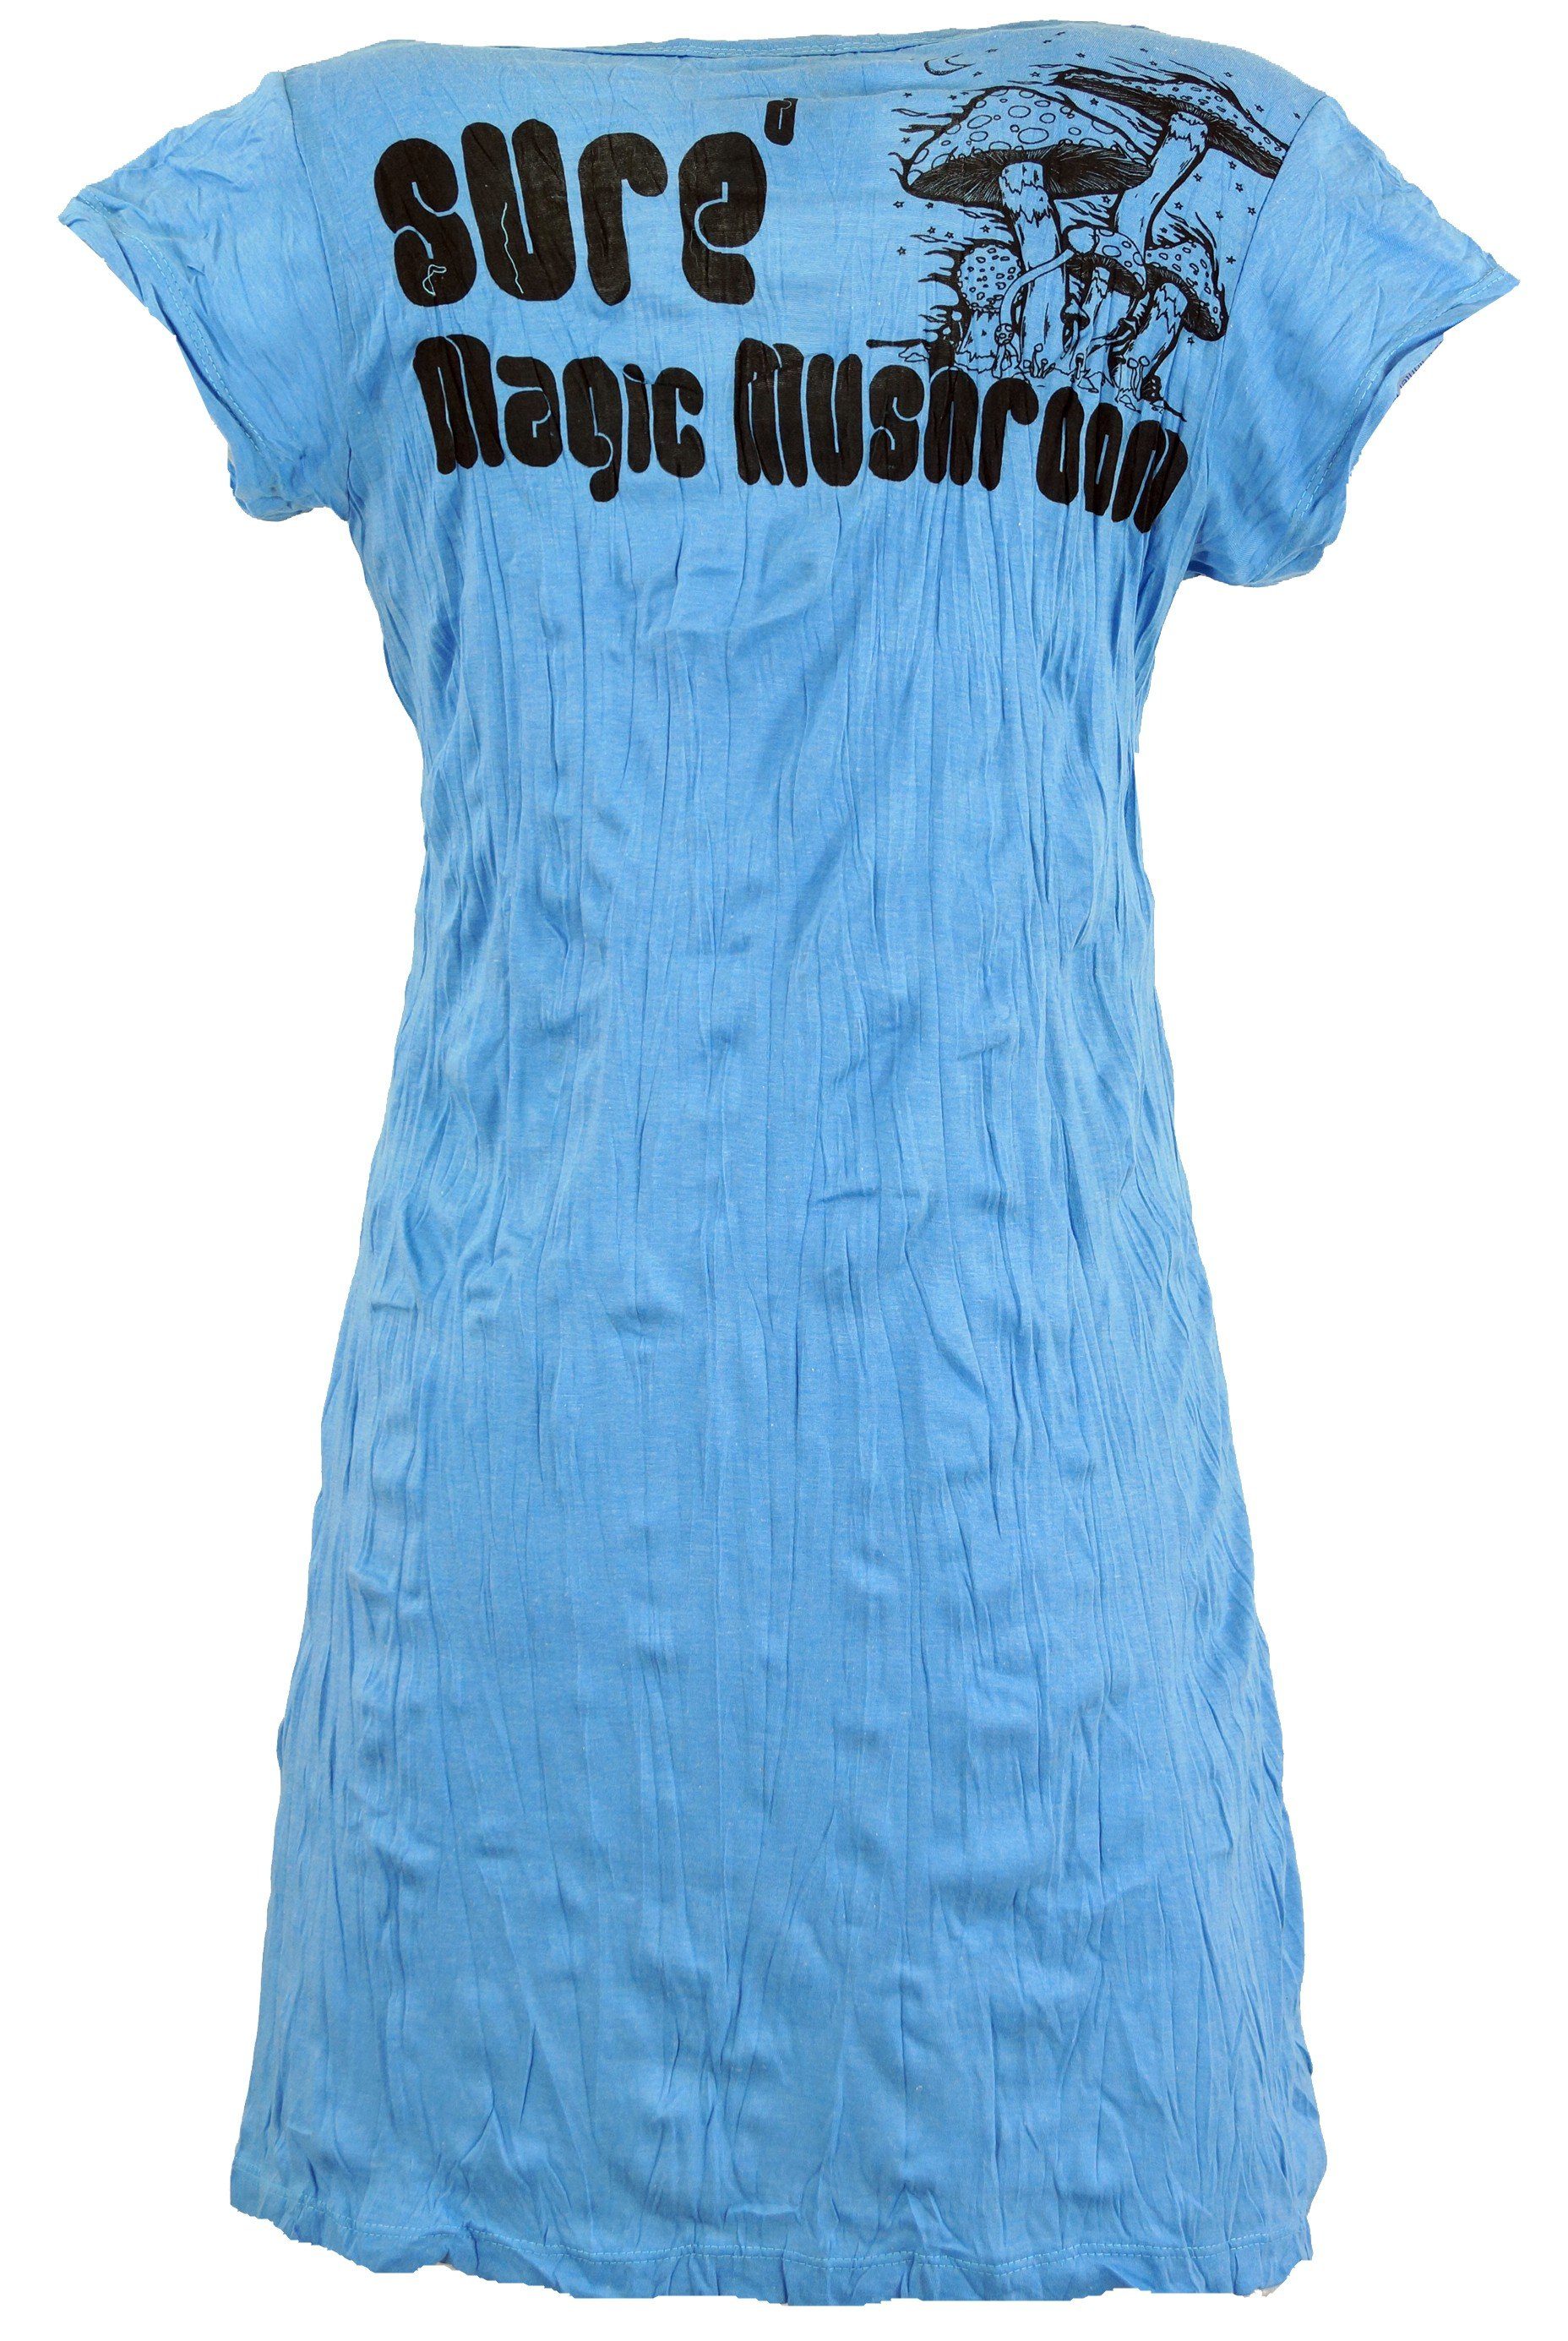 Sure Minikleid Style, Festival, Mushroom T-Shirt Goa hellblau Bekleidung Guru-Shop alternative Magic -.. Long Shirt,